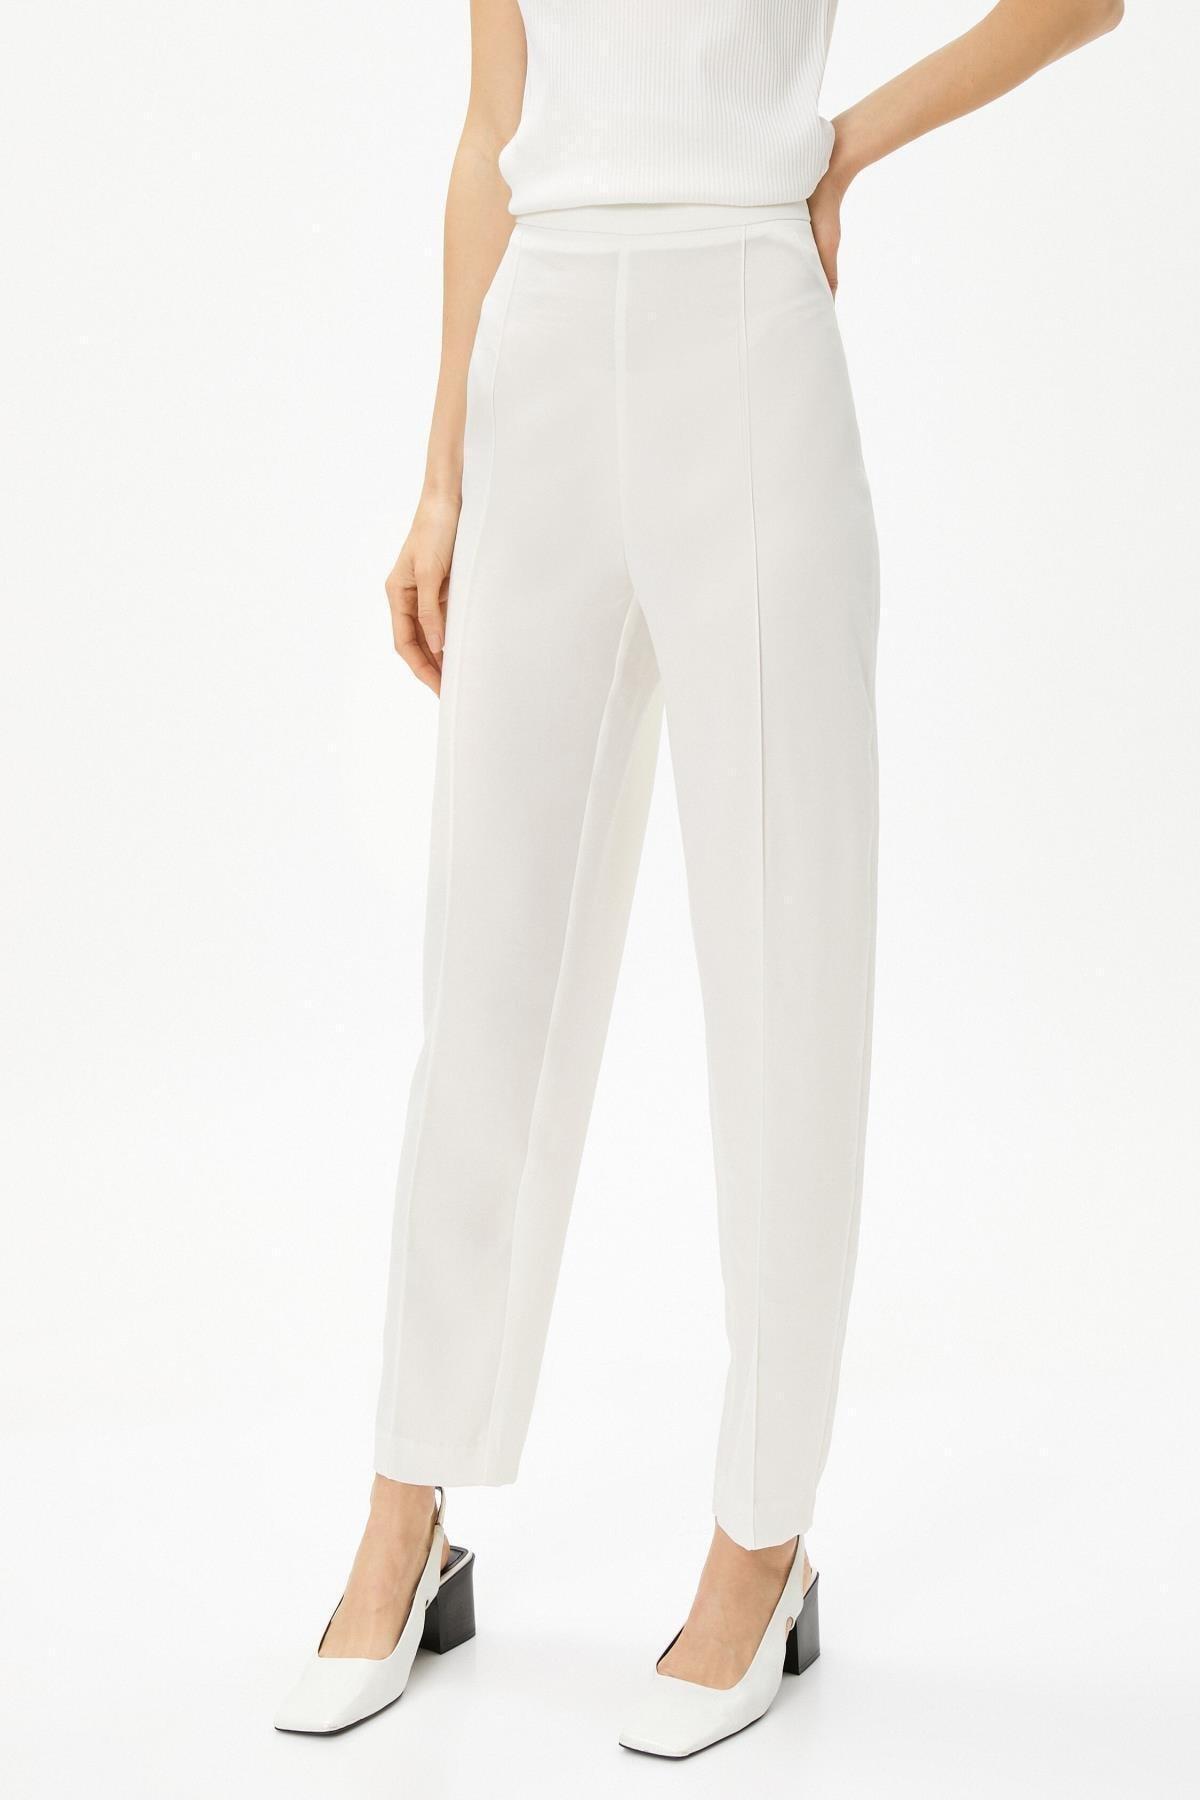 Koton - White Straight Plain Suit Pants